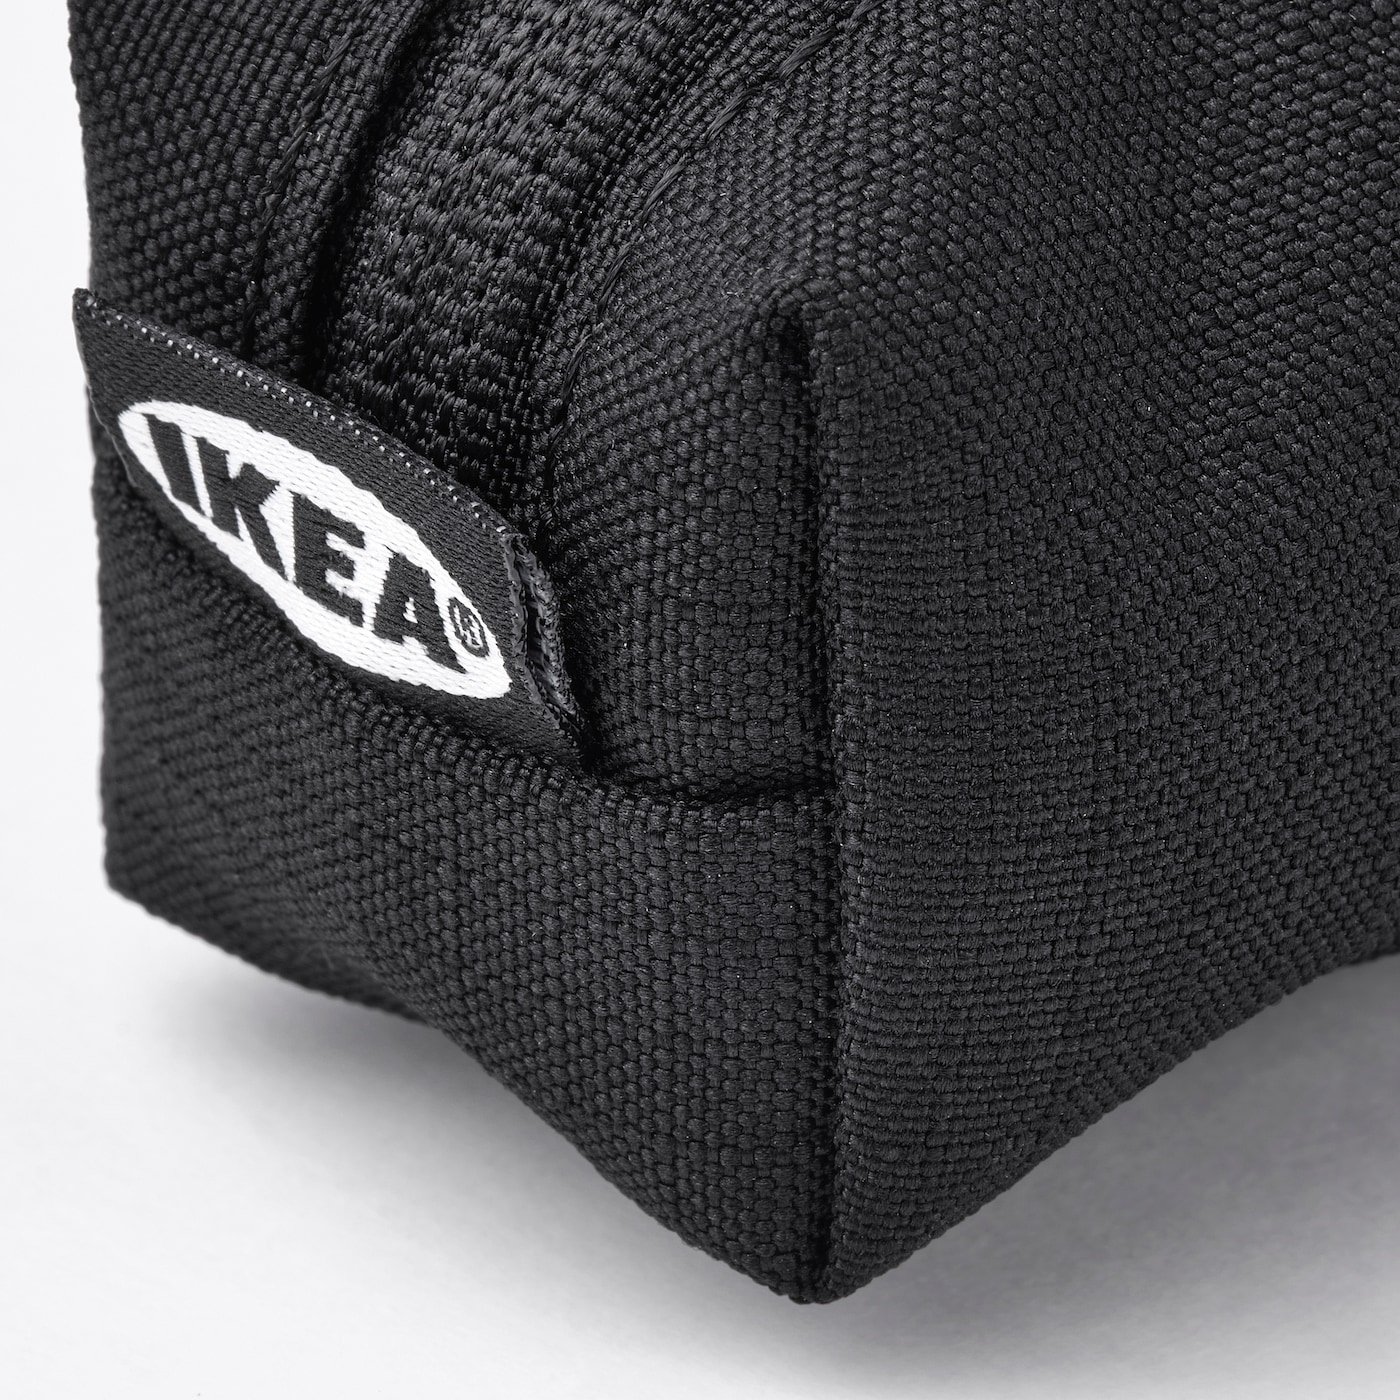 VÄRLDENS accessory bag black - IKEA